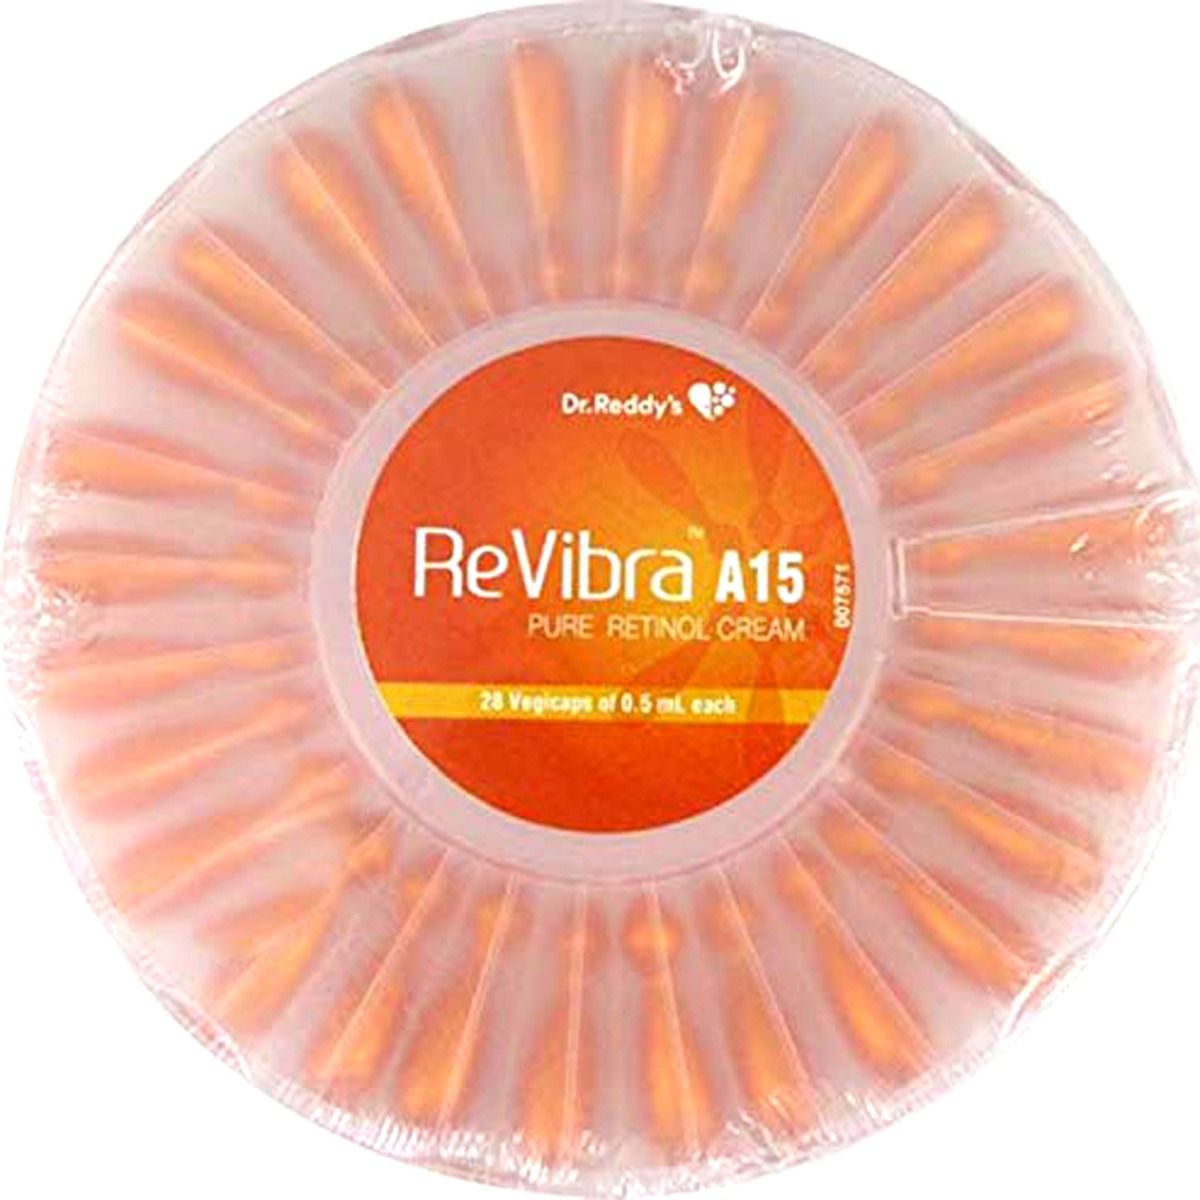 ReVibra A15 Pure Retinol Cream, 28 Vegicaps